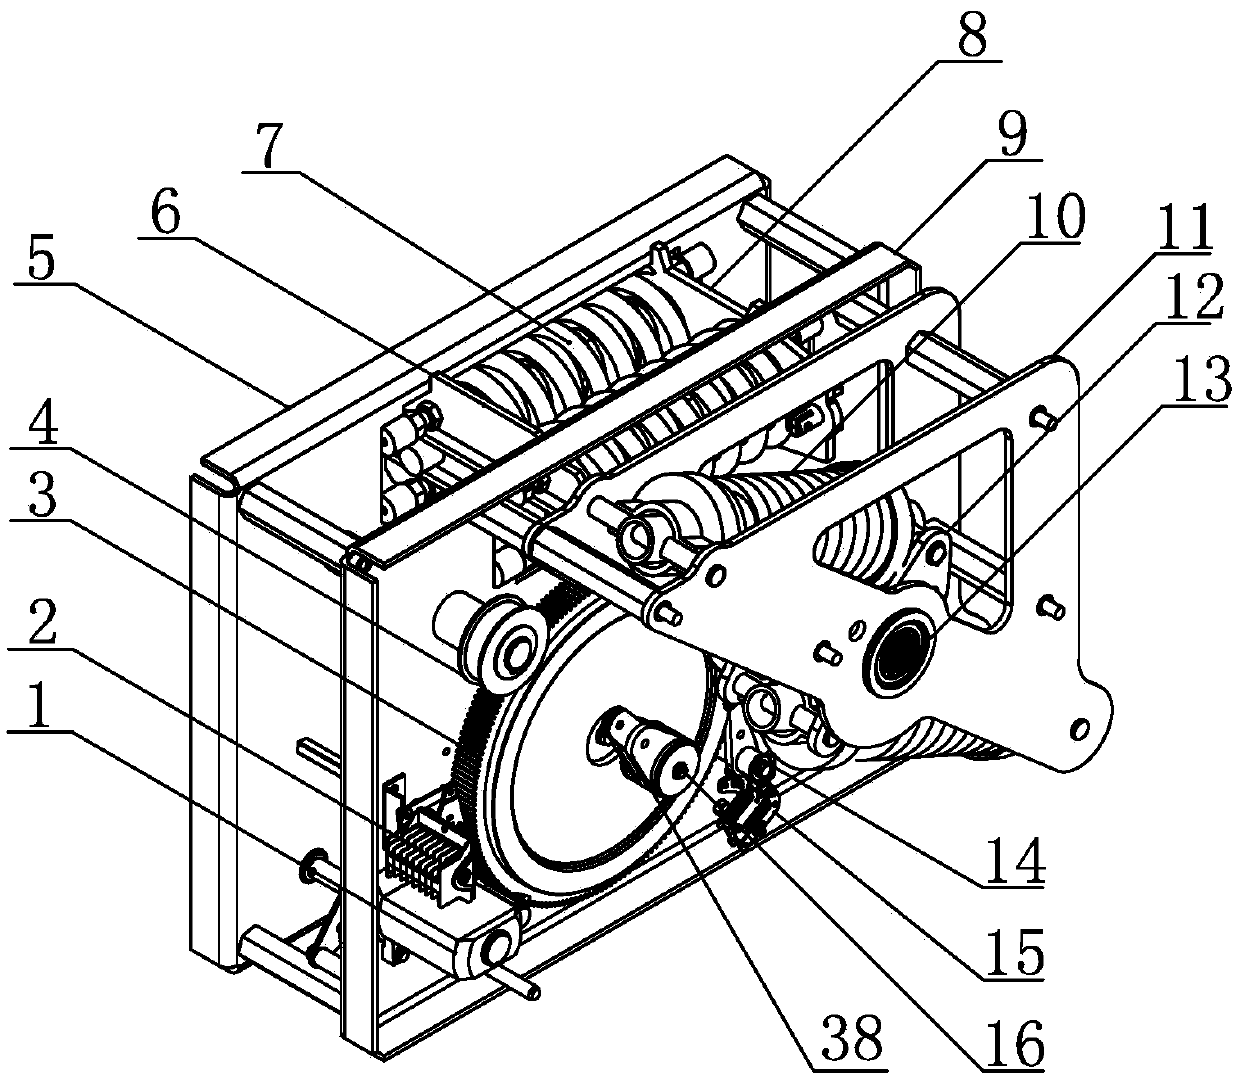 Spring operating mechanism for circuit breaker